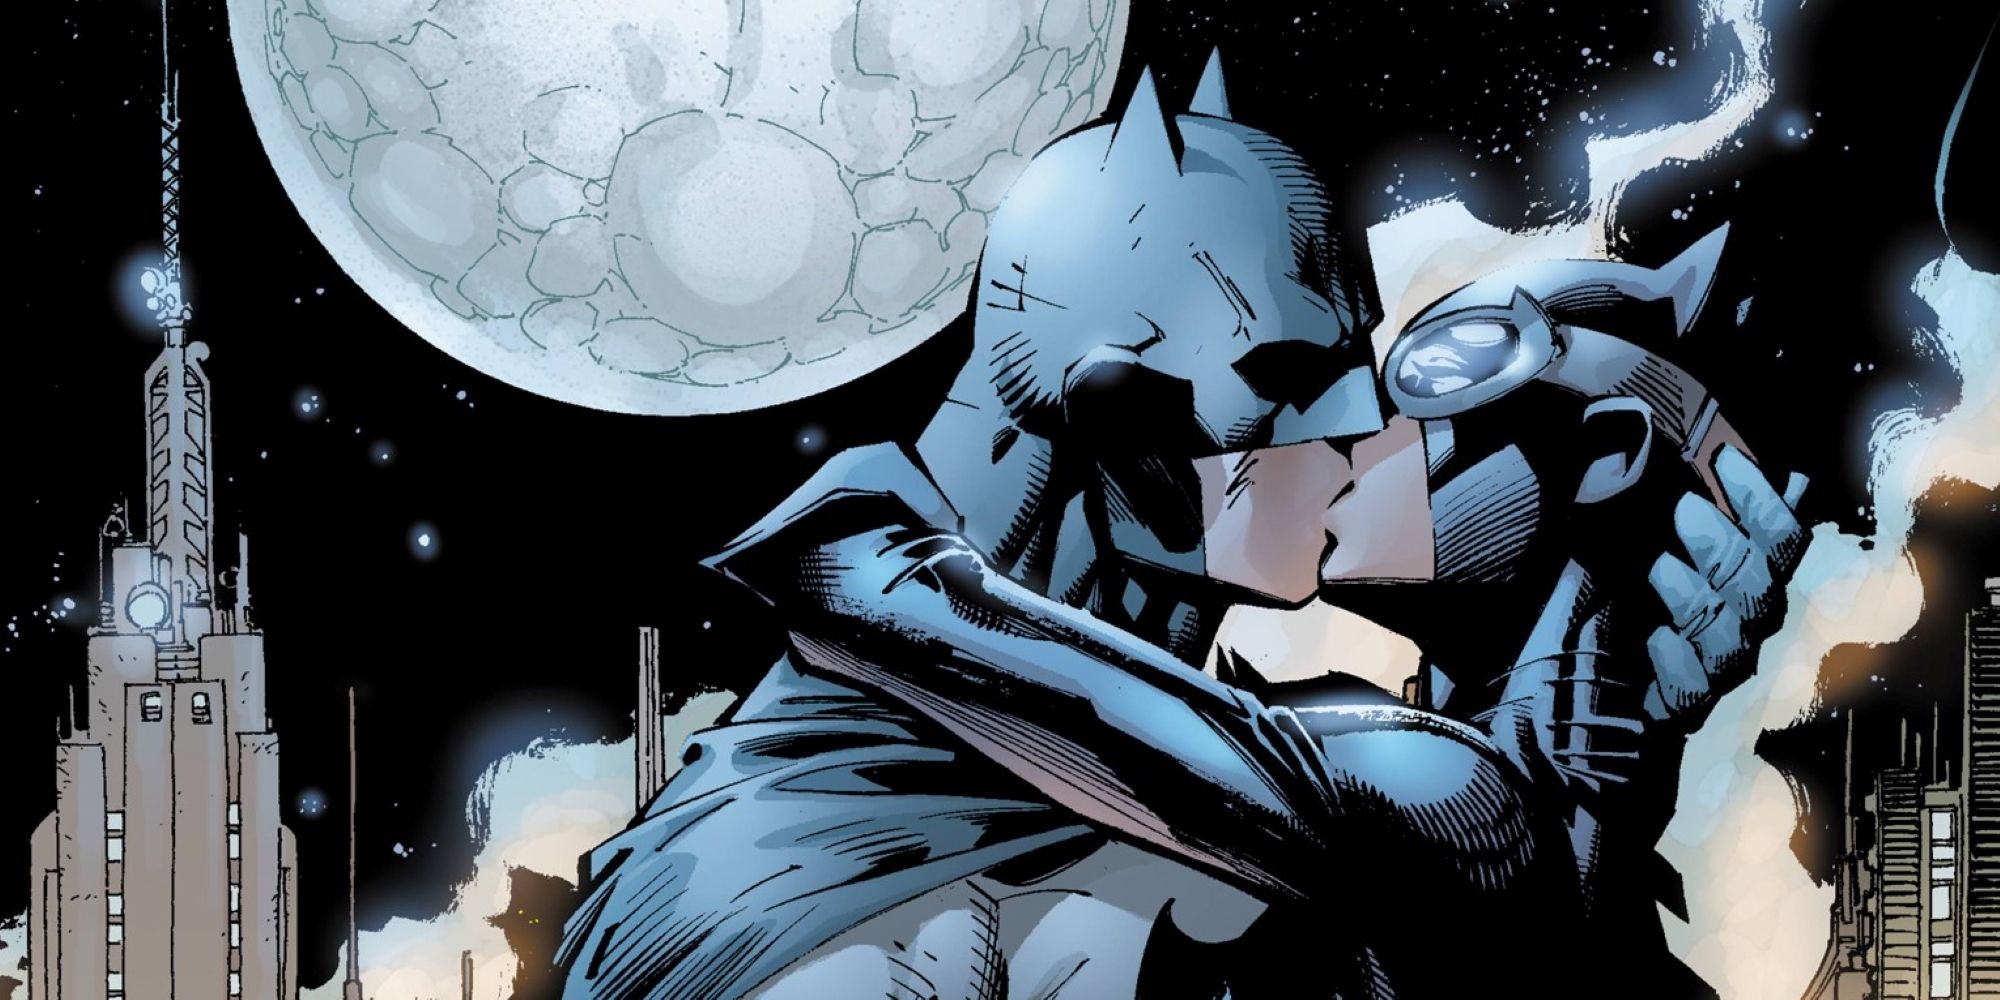 Selina Kyle (Catwoman) and Bruce Wayne (Batman) kiss DC Comics